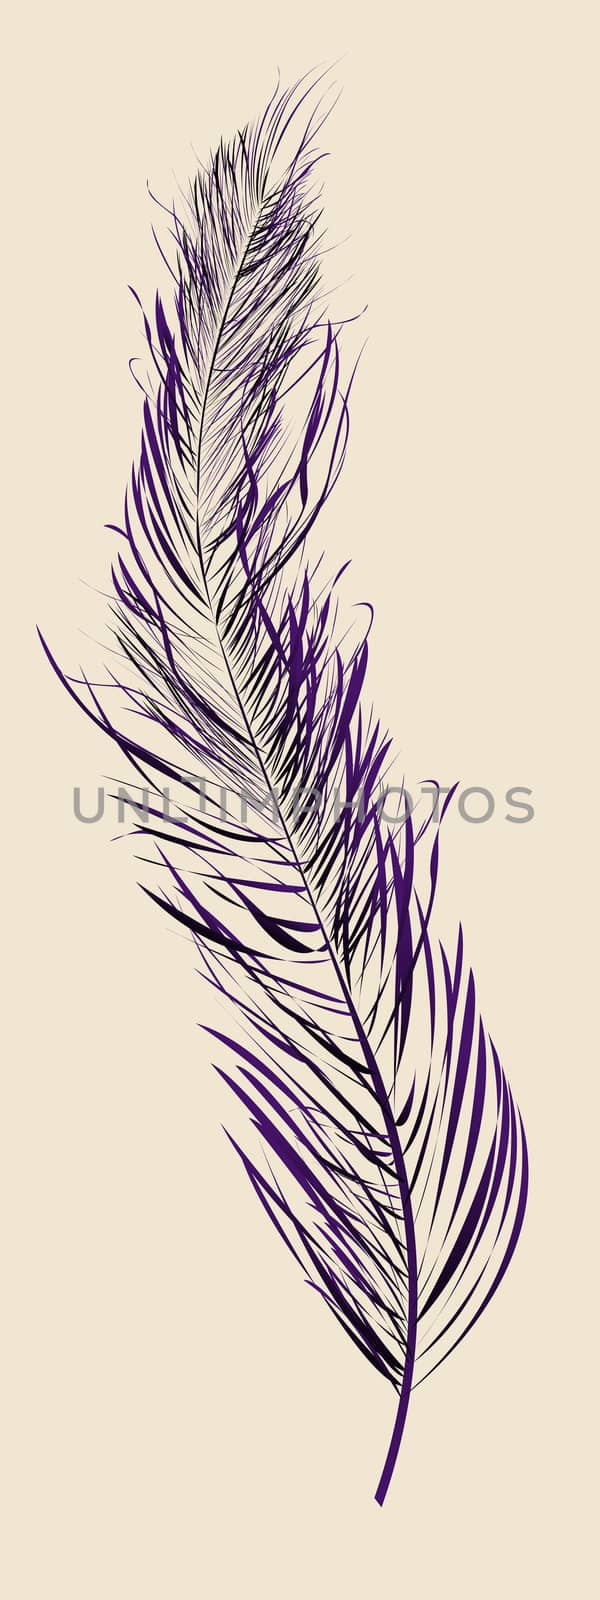 Purple feather by Lirch